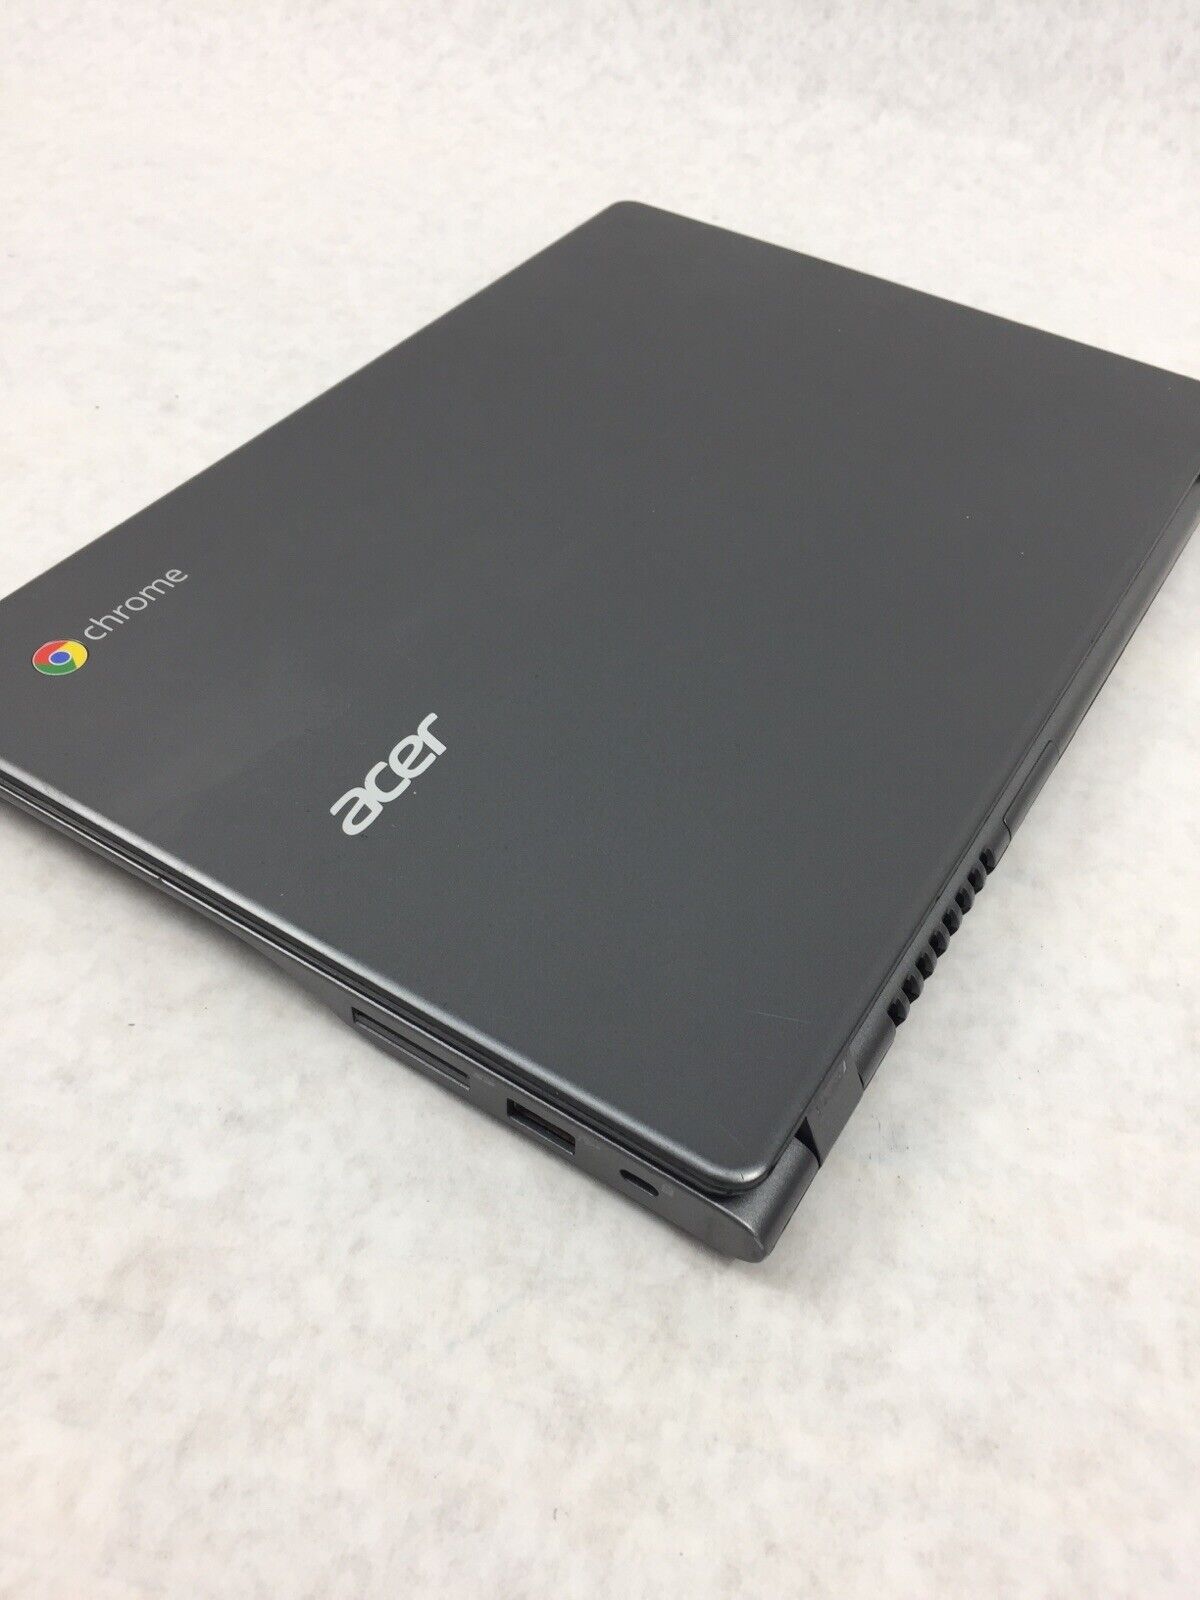 Acer C720 Chromebook 4GB RAM 16GB SSD 11.6" Intel Celeron 1.40GHz NO CHARGER